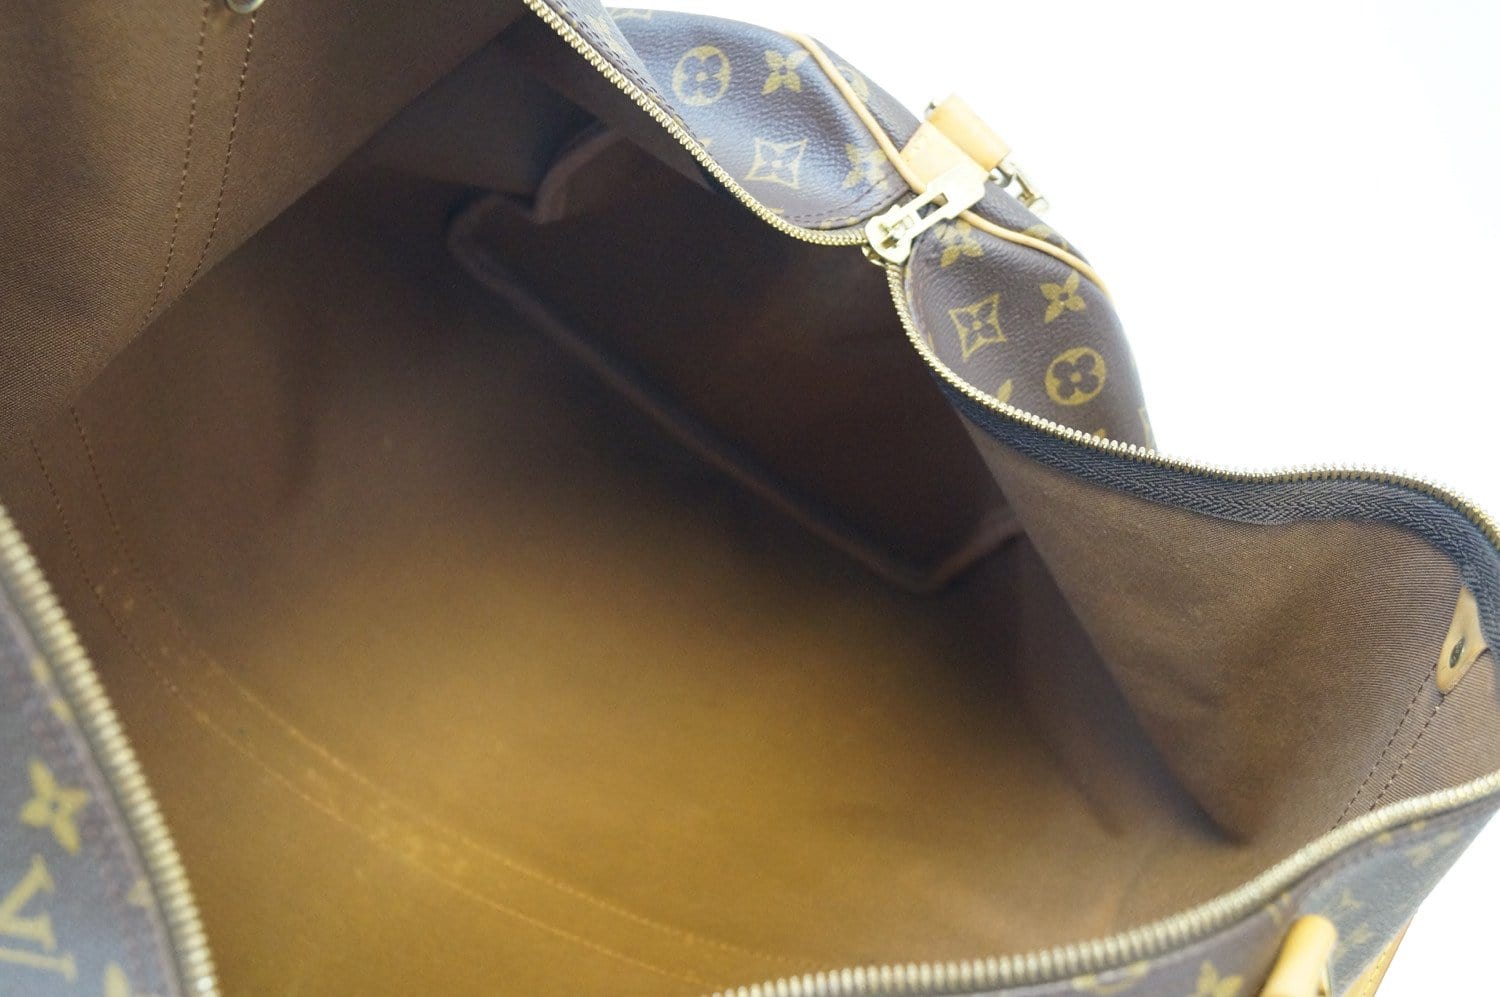 Lot - Louis Vuitton Keepall Bandouliere 60 Travel Bag, 1987